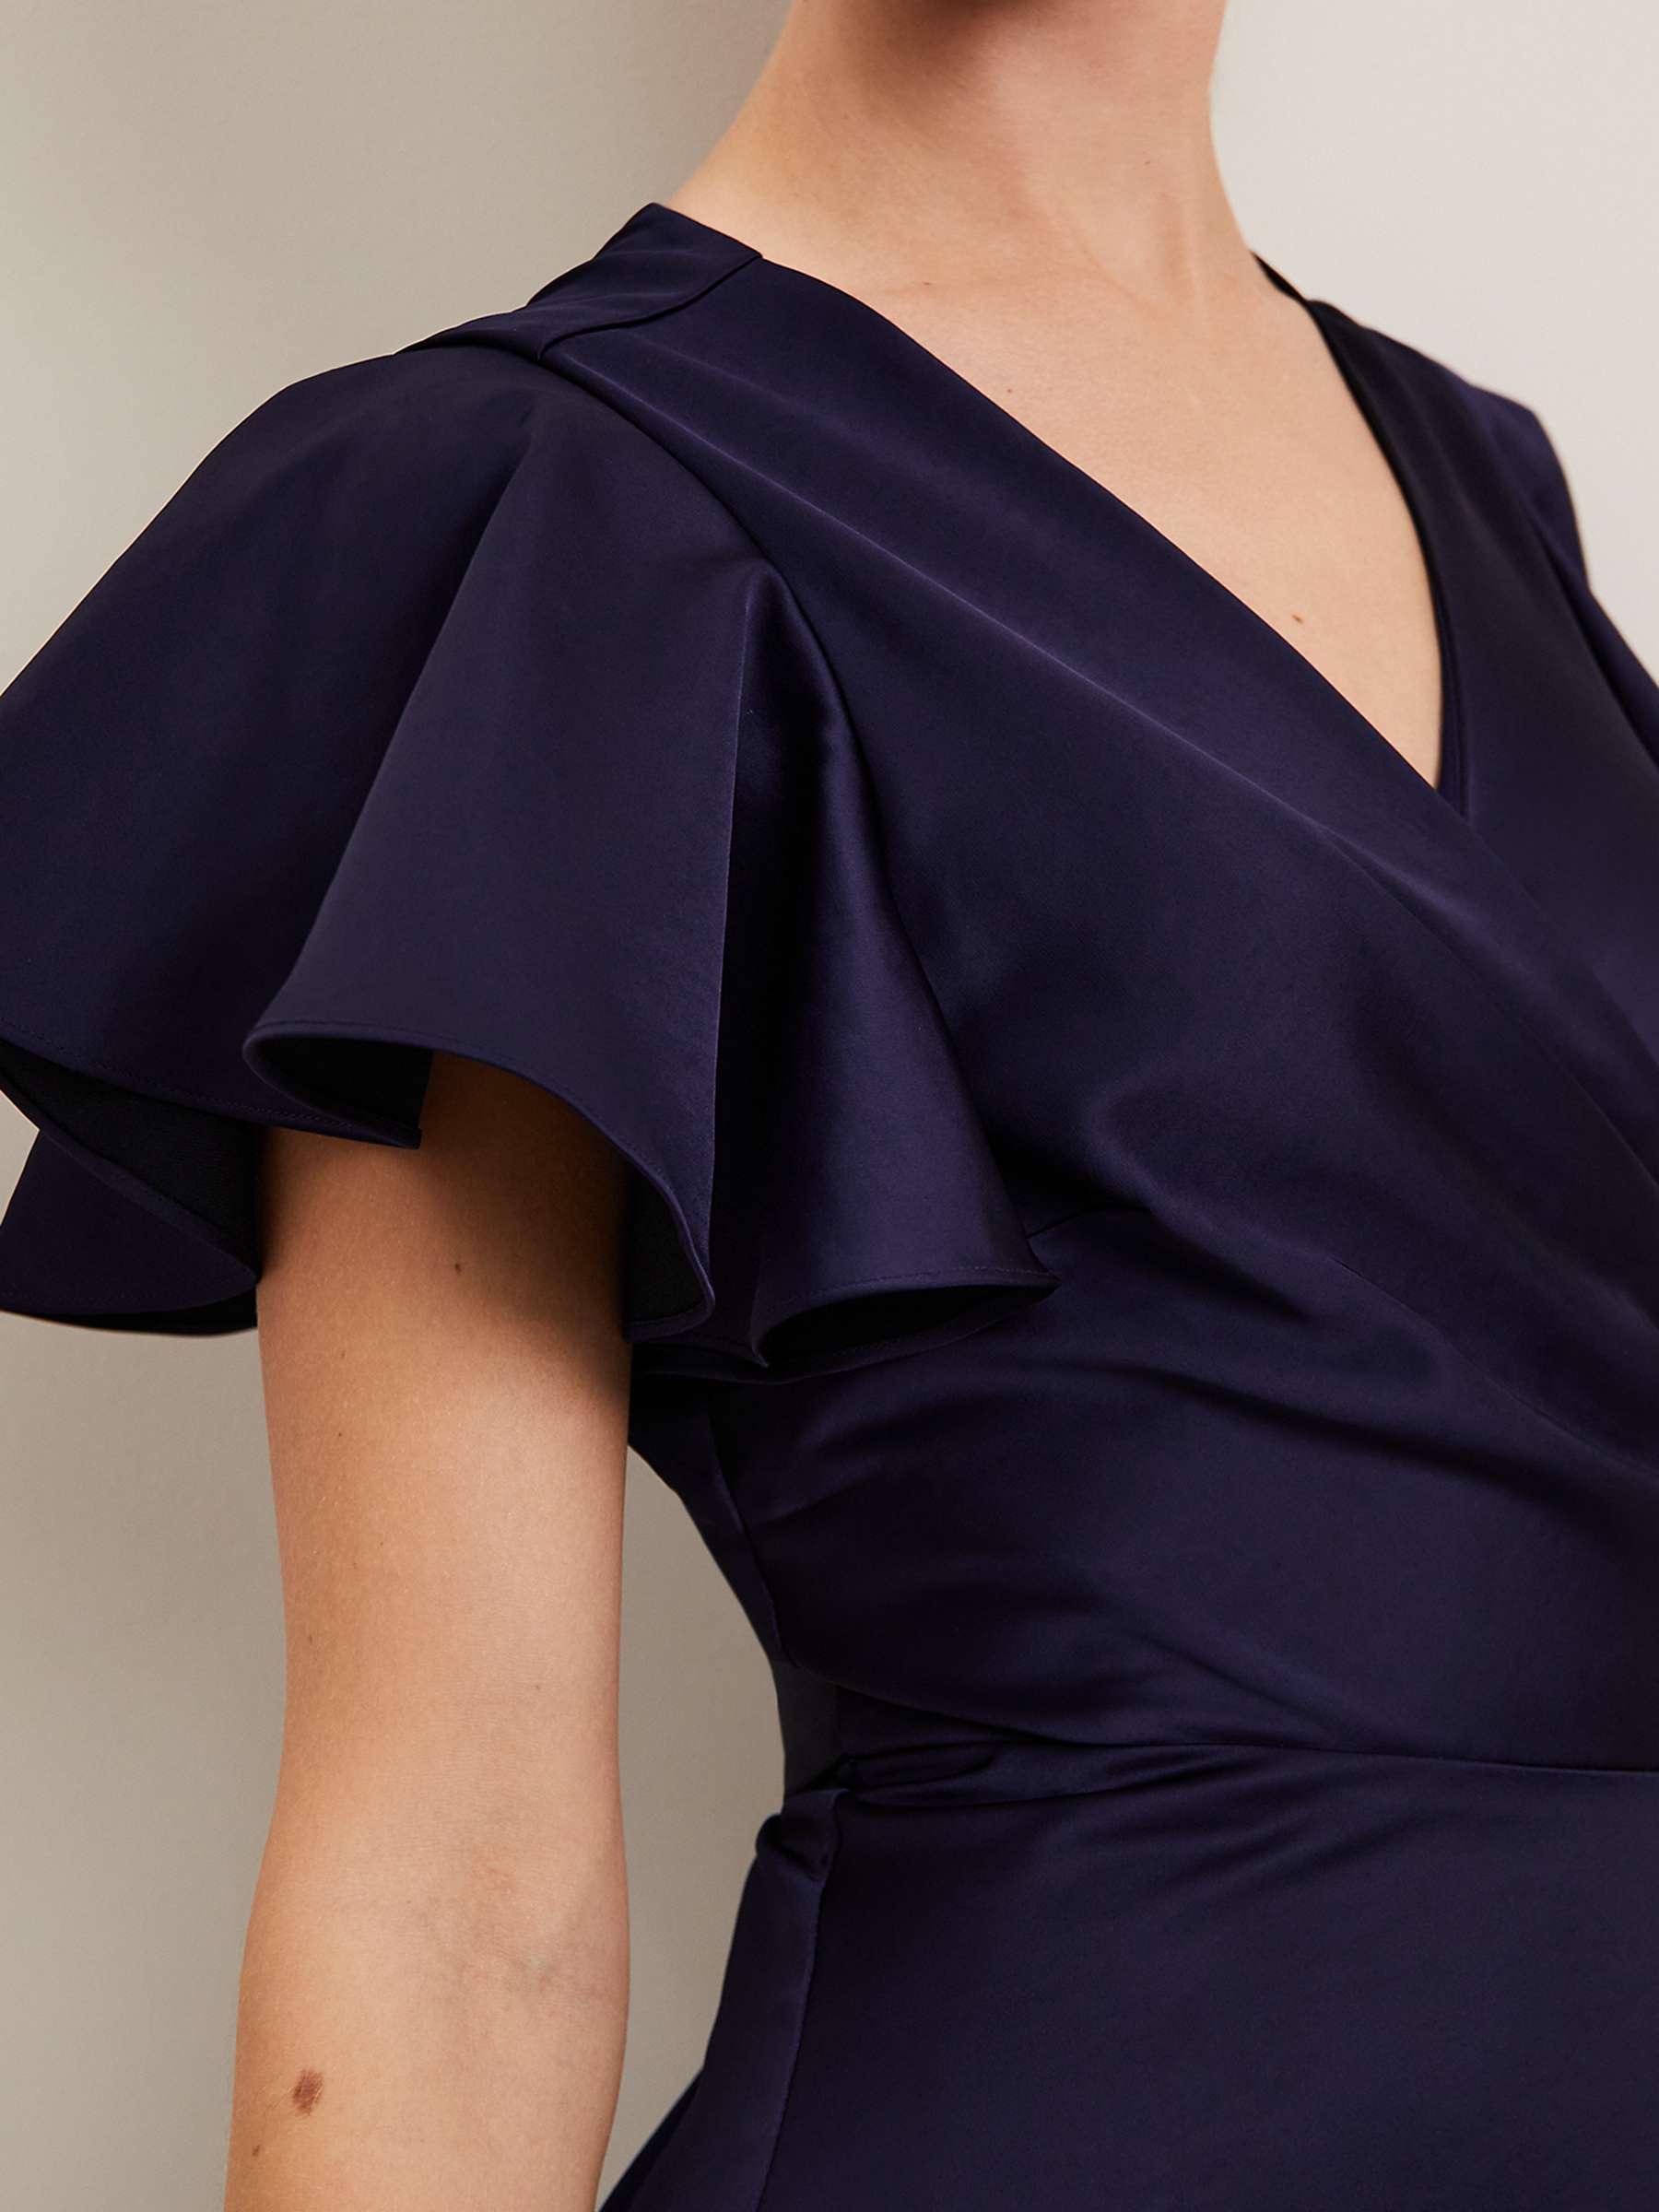 Buy Phase Eight Arabella Satin Maxi Dress, Navy Online at johnlewis.com